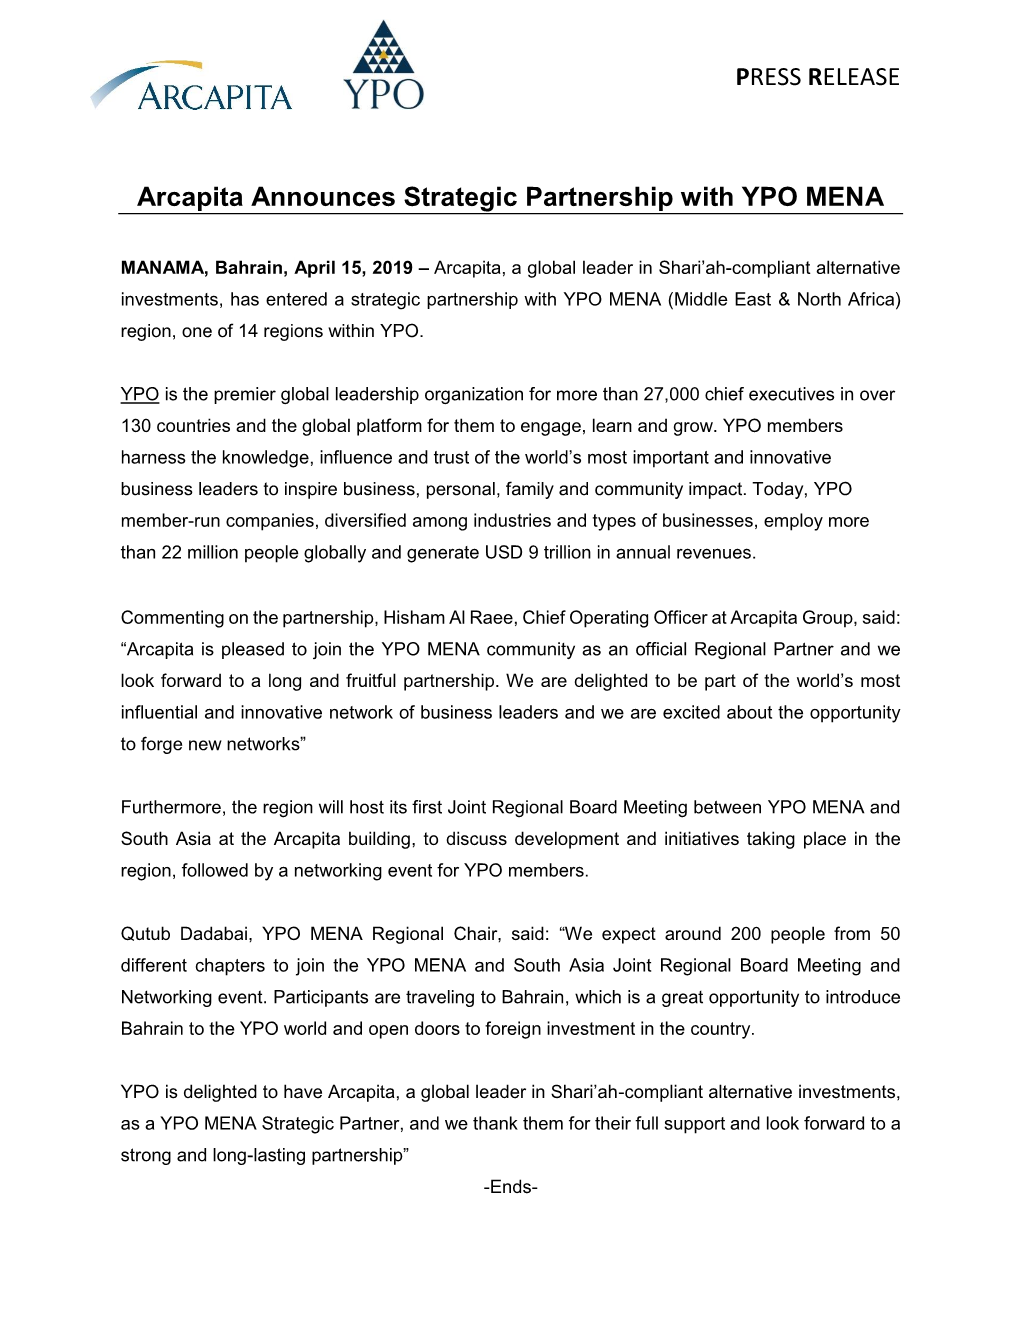 PRESS RELEASE Arcapita Announces Strategic Partnership with YPO MENA